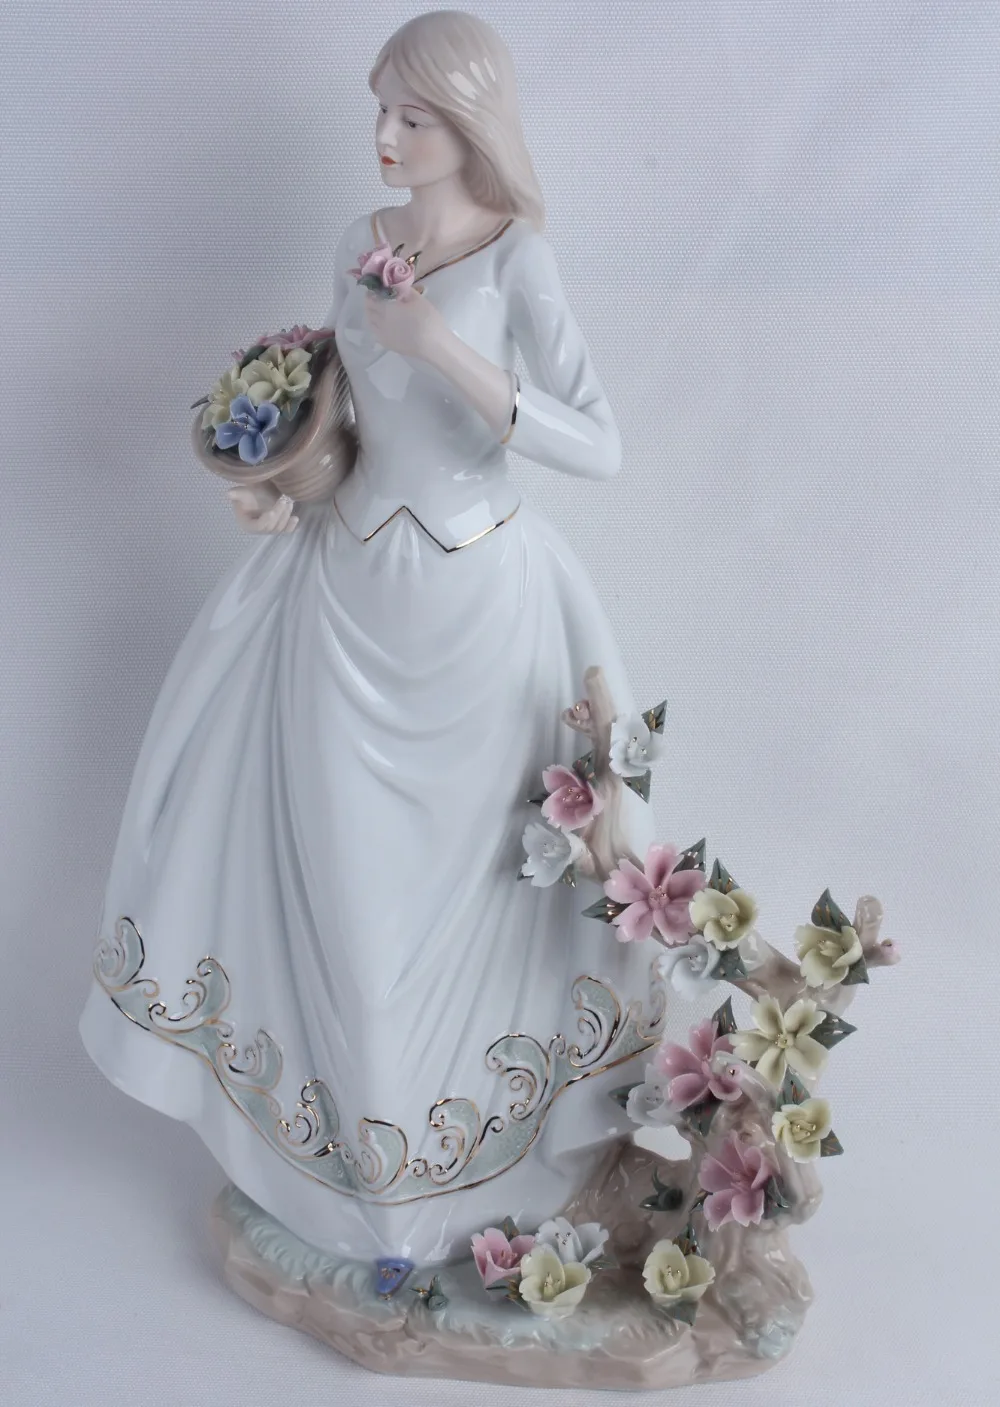 

[MGT] Vintage Porcelain Flower Picking Girl Miniature Statuette Handmade Ceramics Belle Figurine Decoration Present Ornament